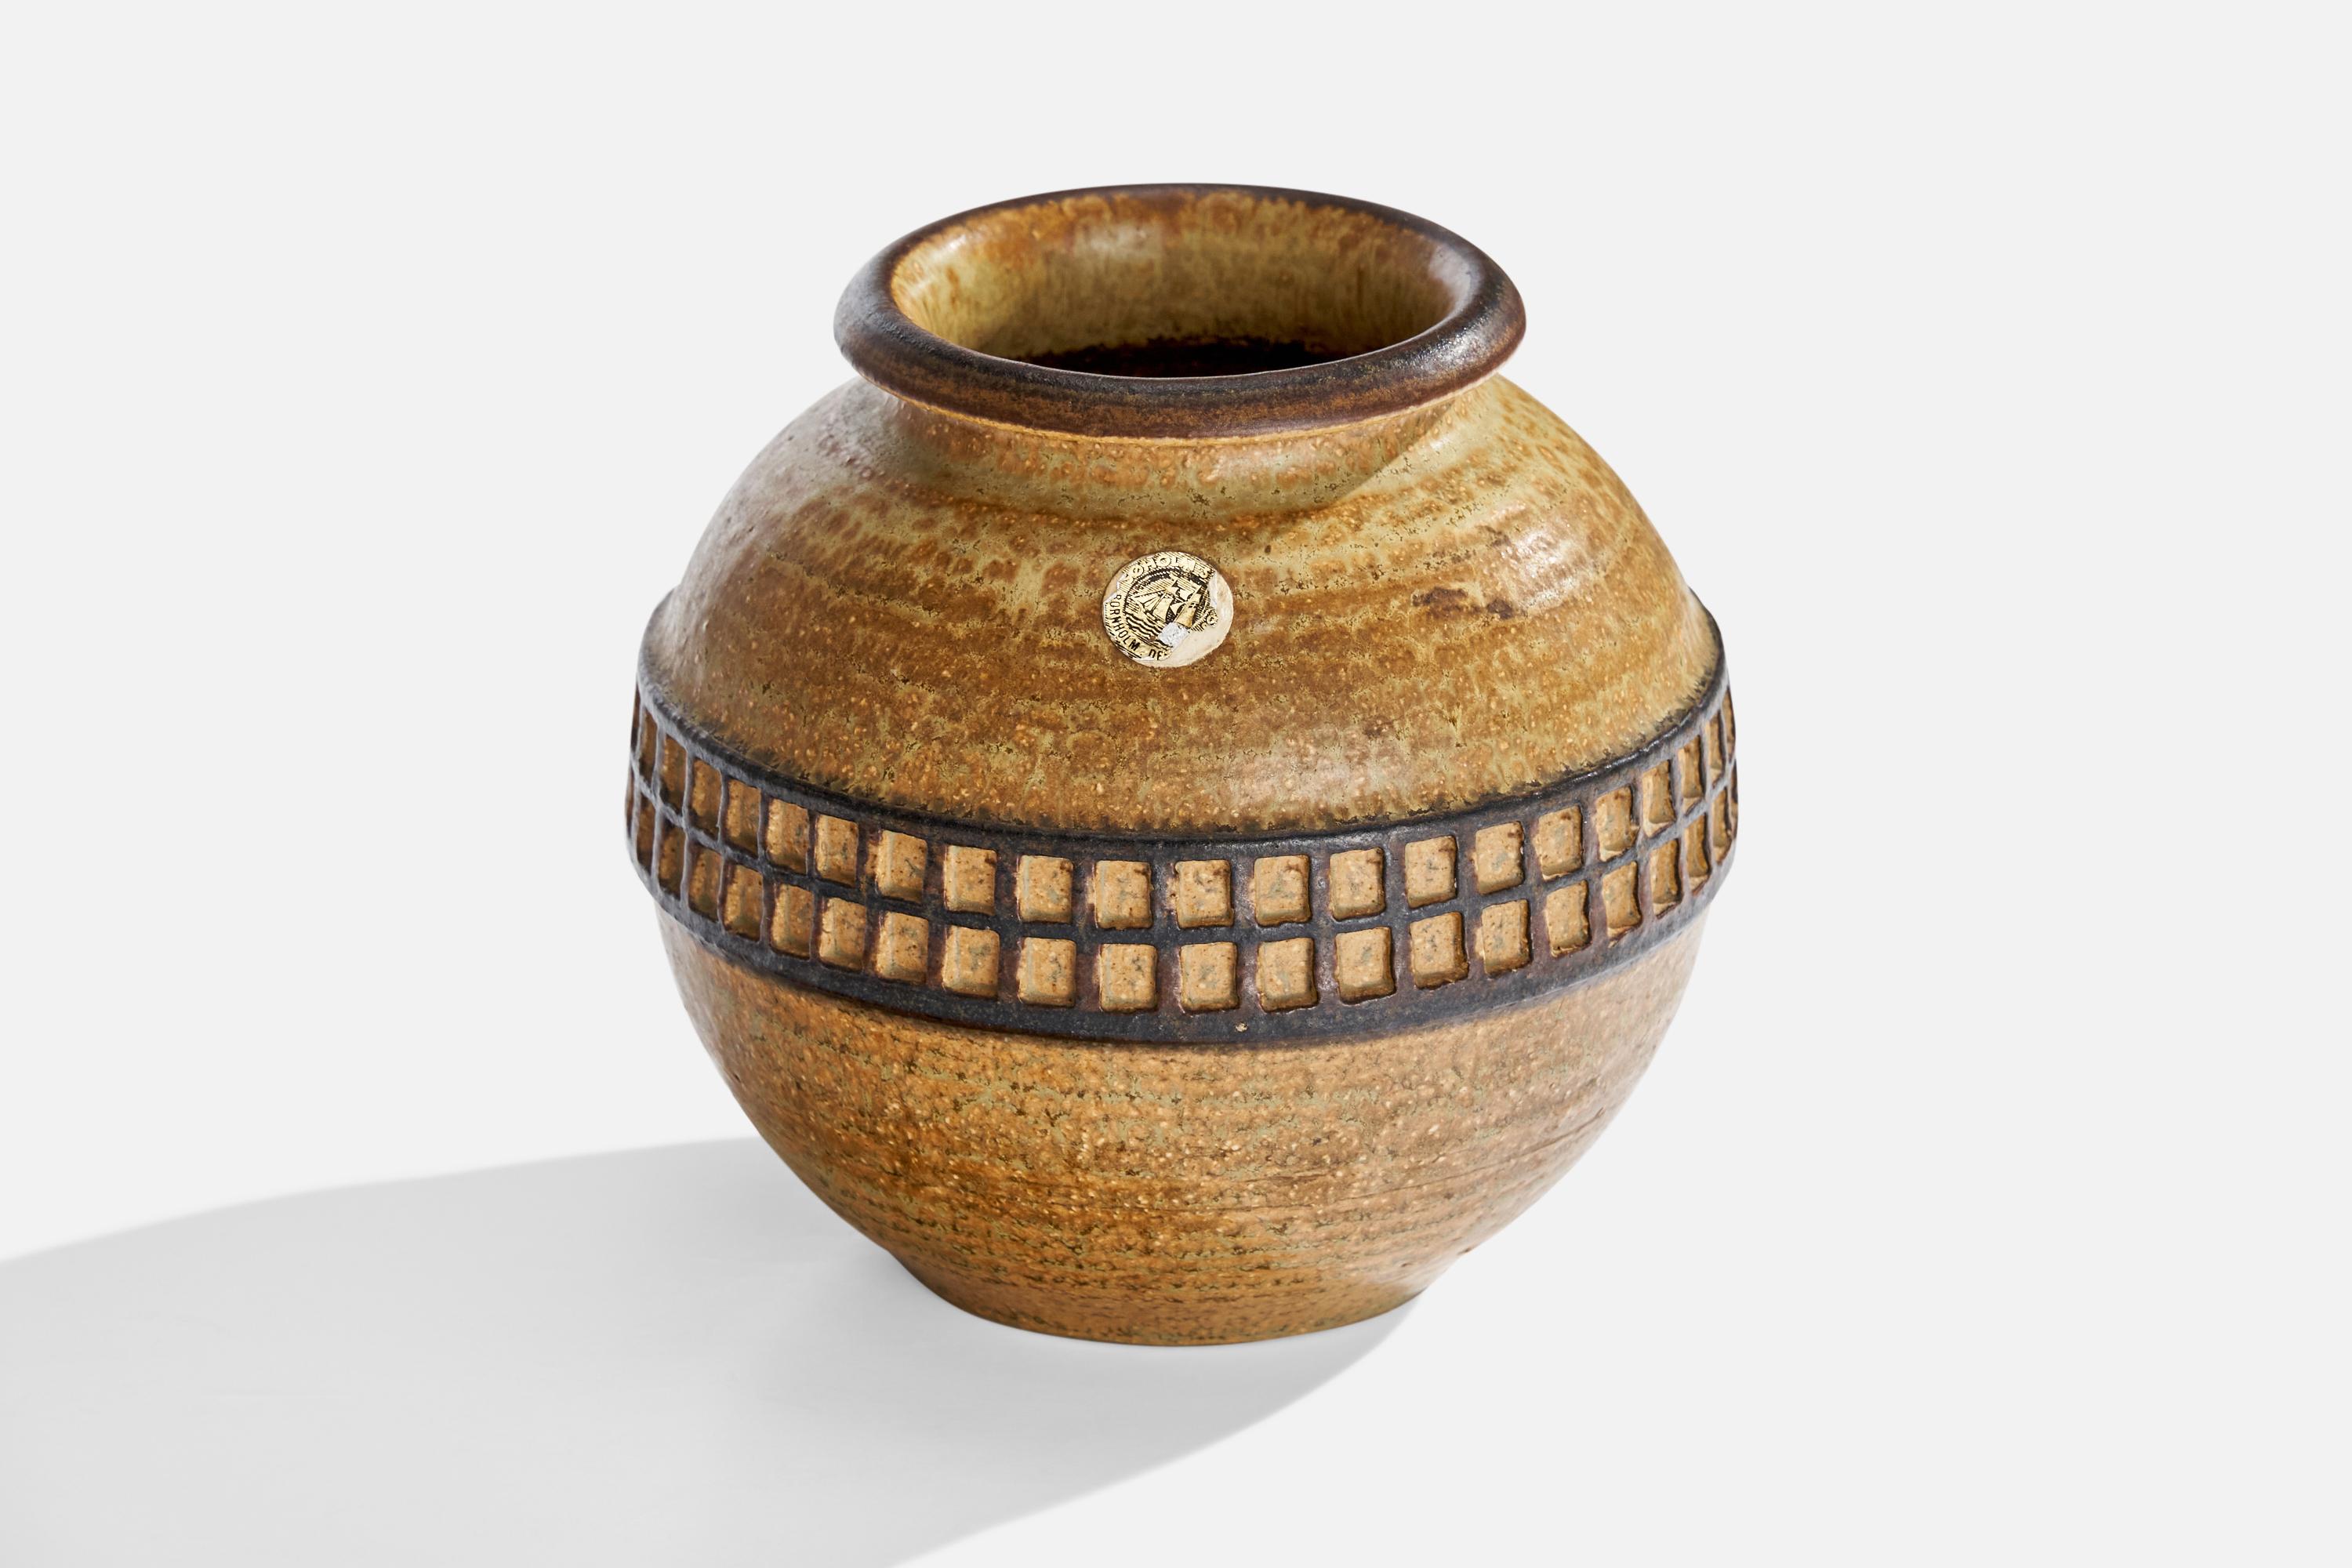 A beige and brown-glazed stoneware vase produced by Søholm Stentøj, Denmark, 1960s.